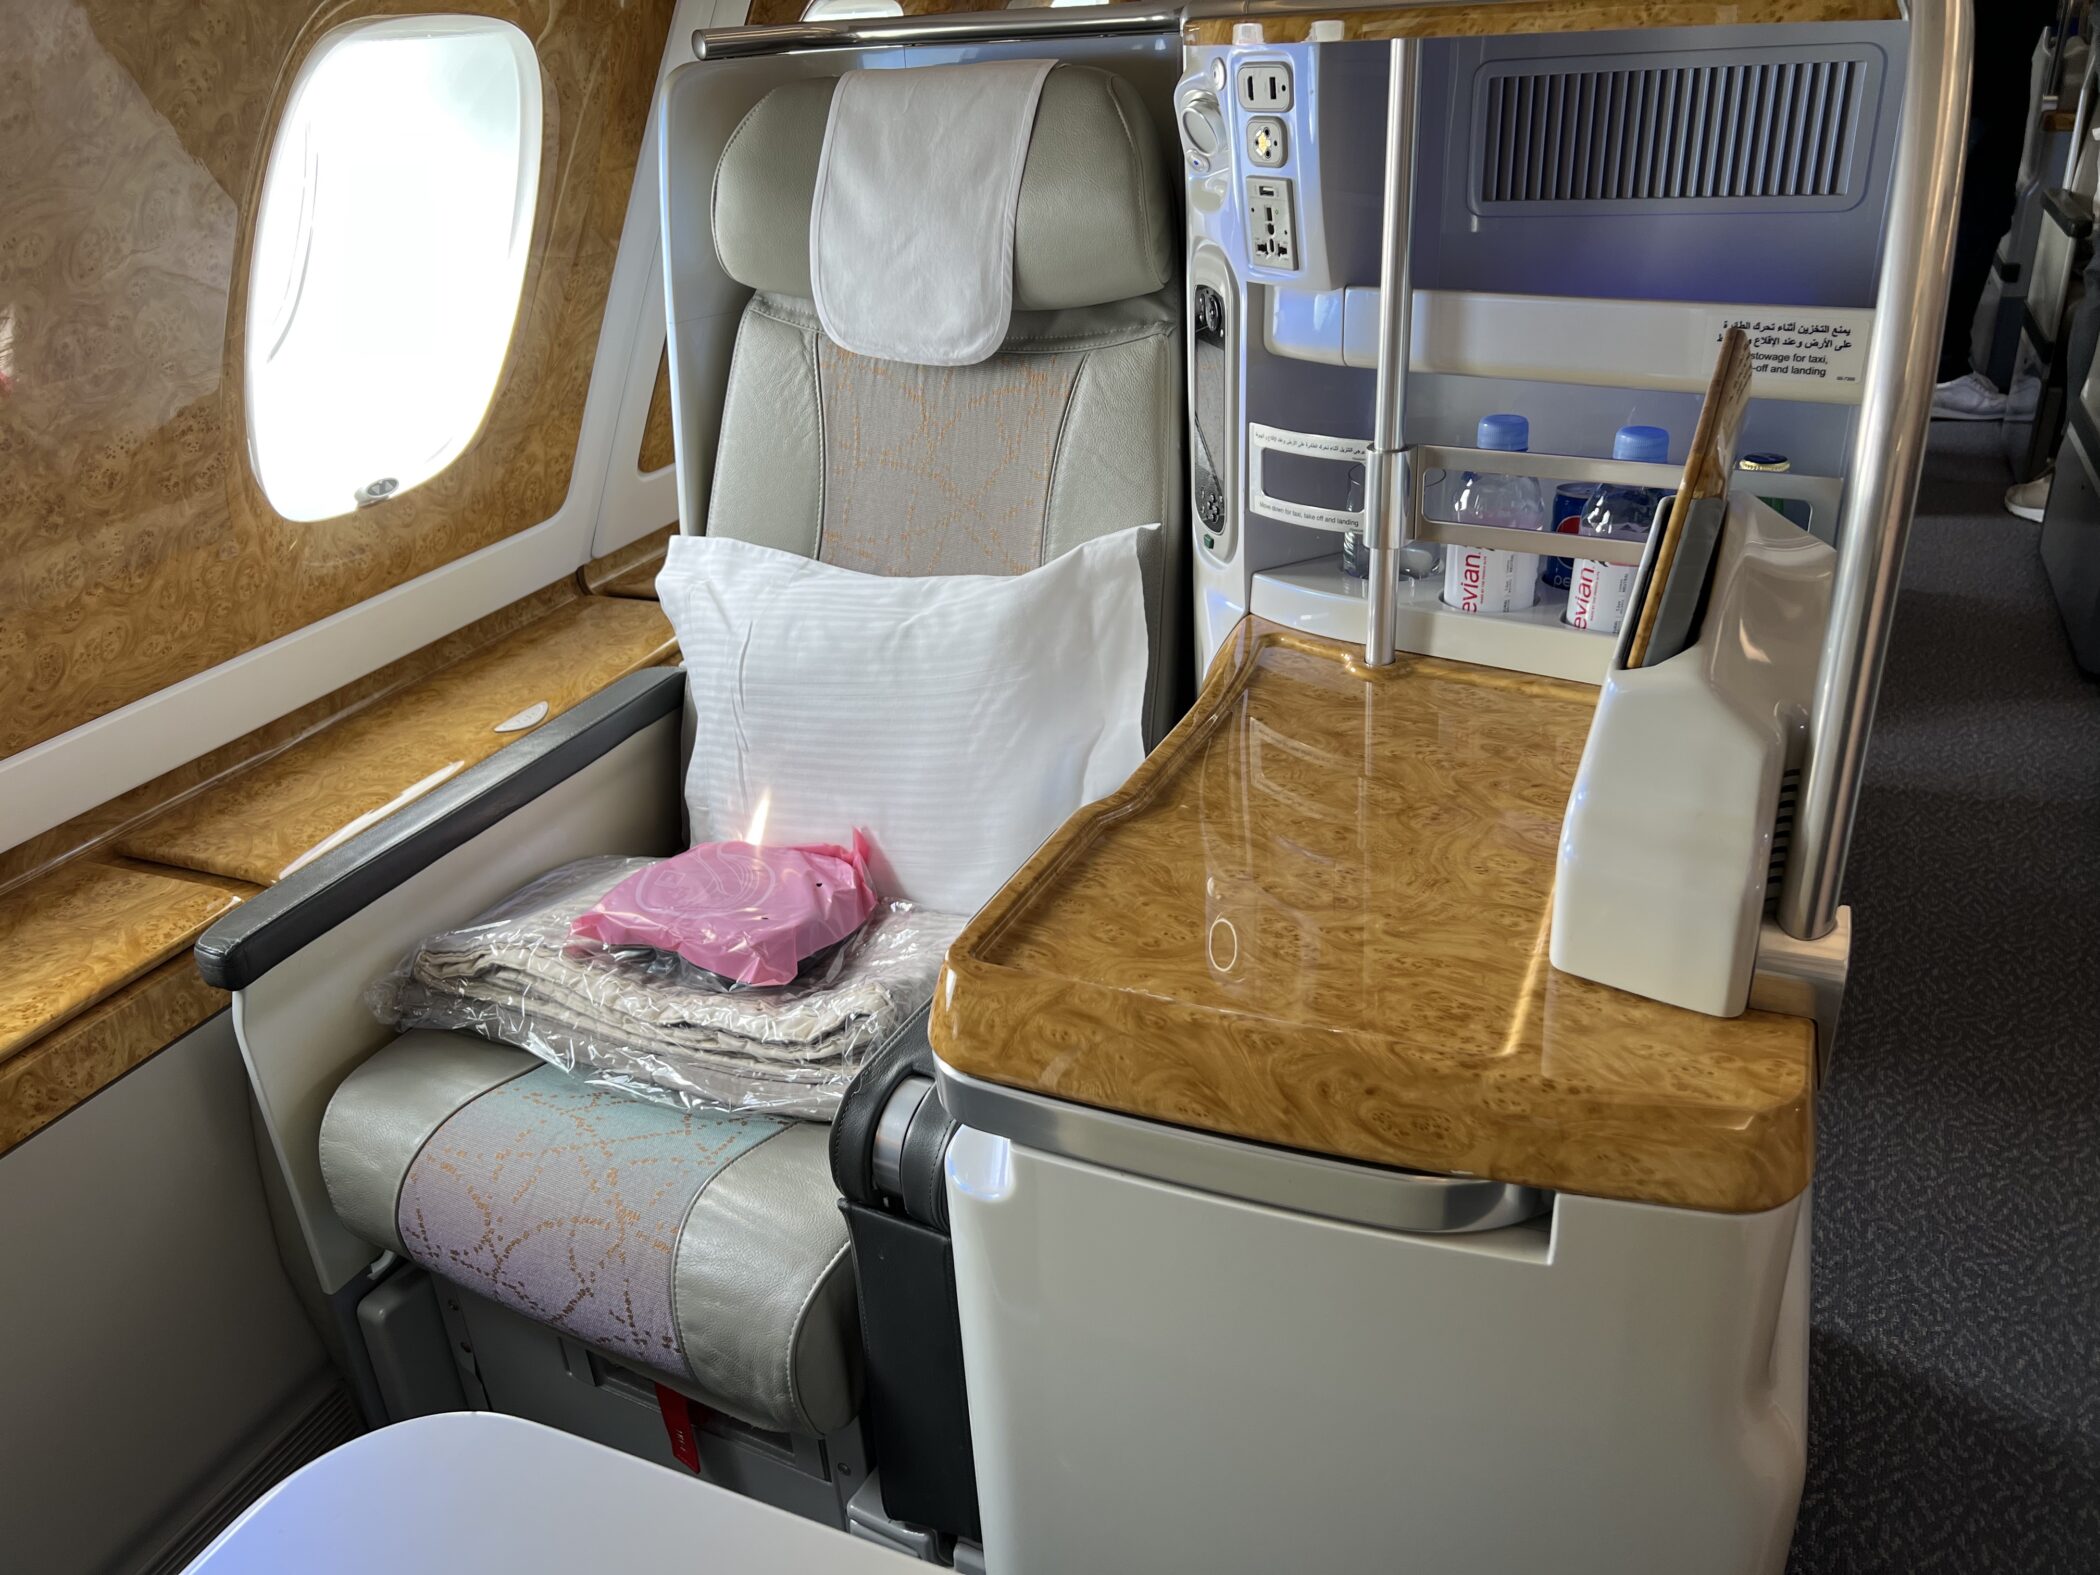 Emirates business class A380